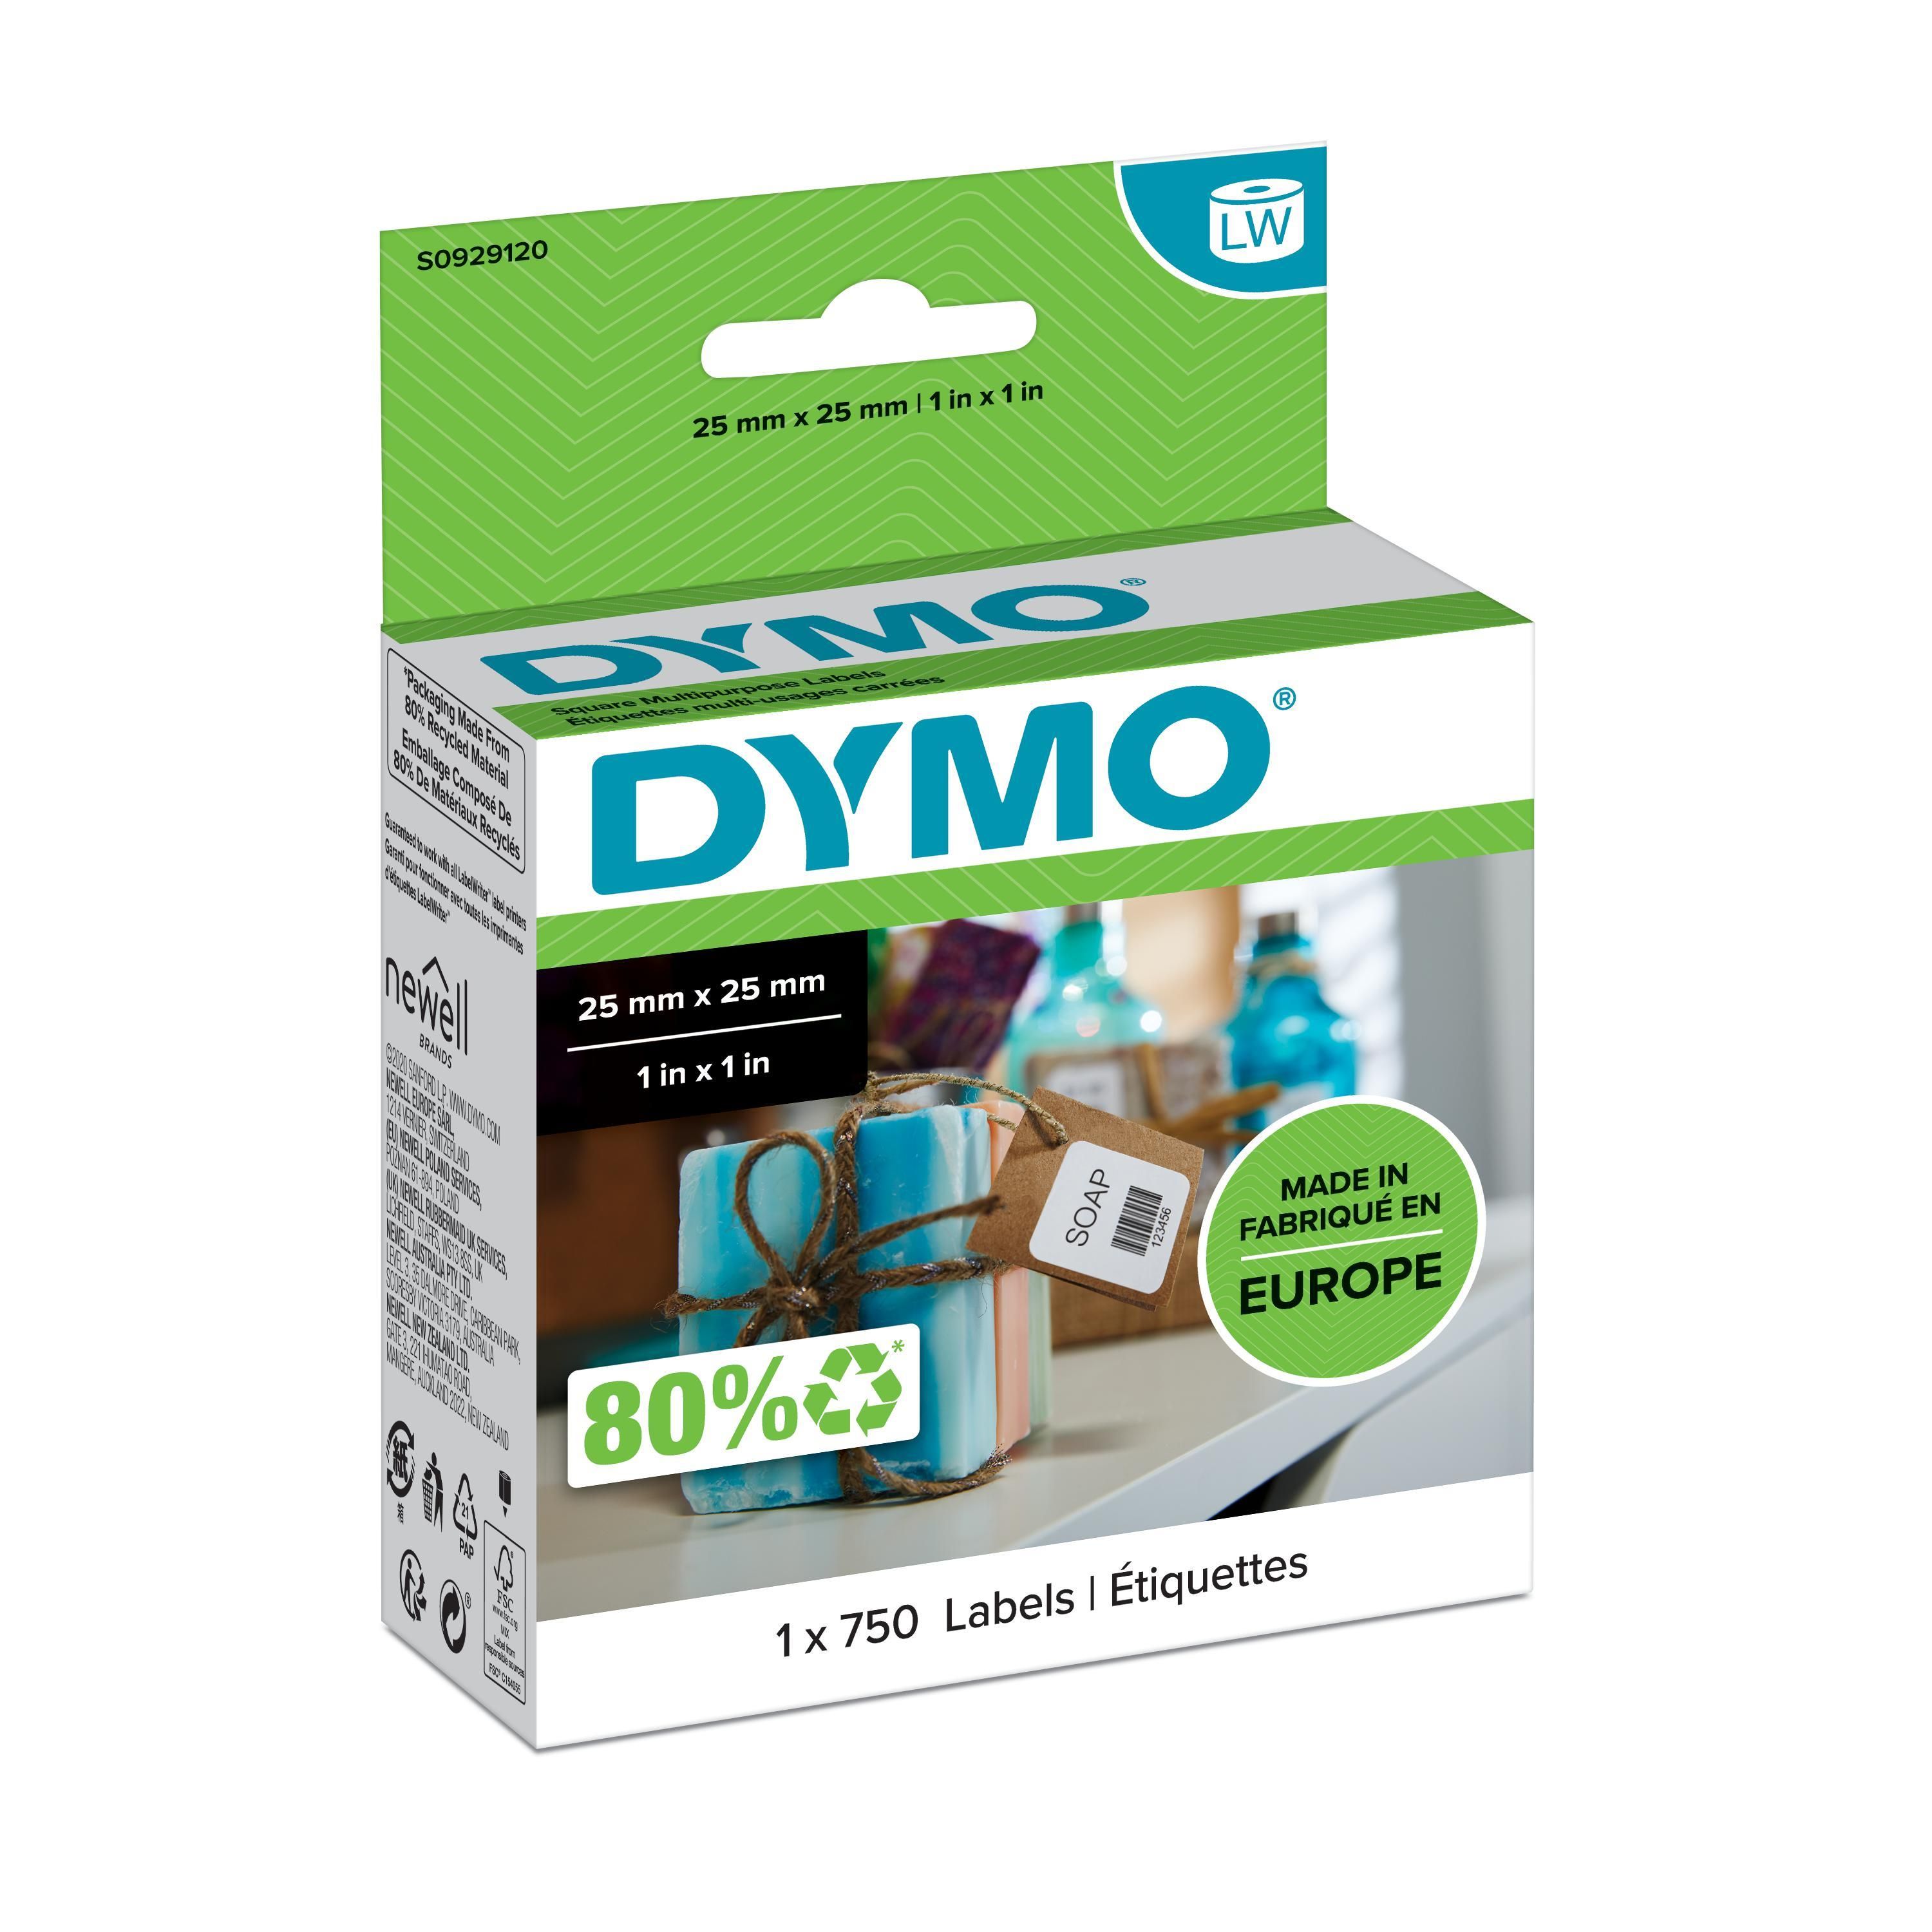 Dymo Cf750 Etichette Labelwriter